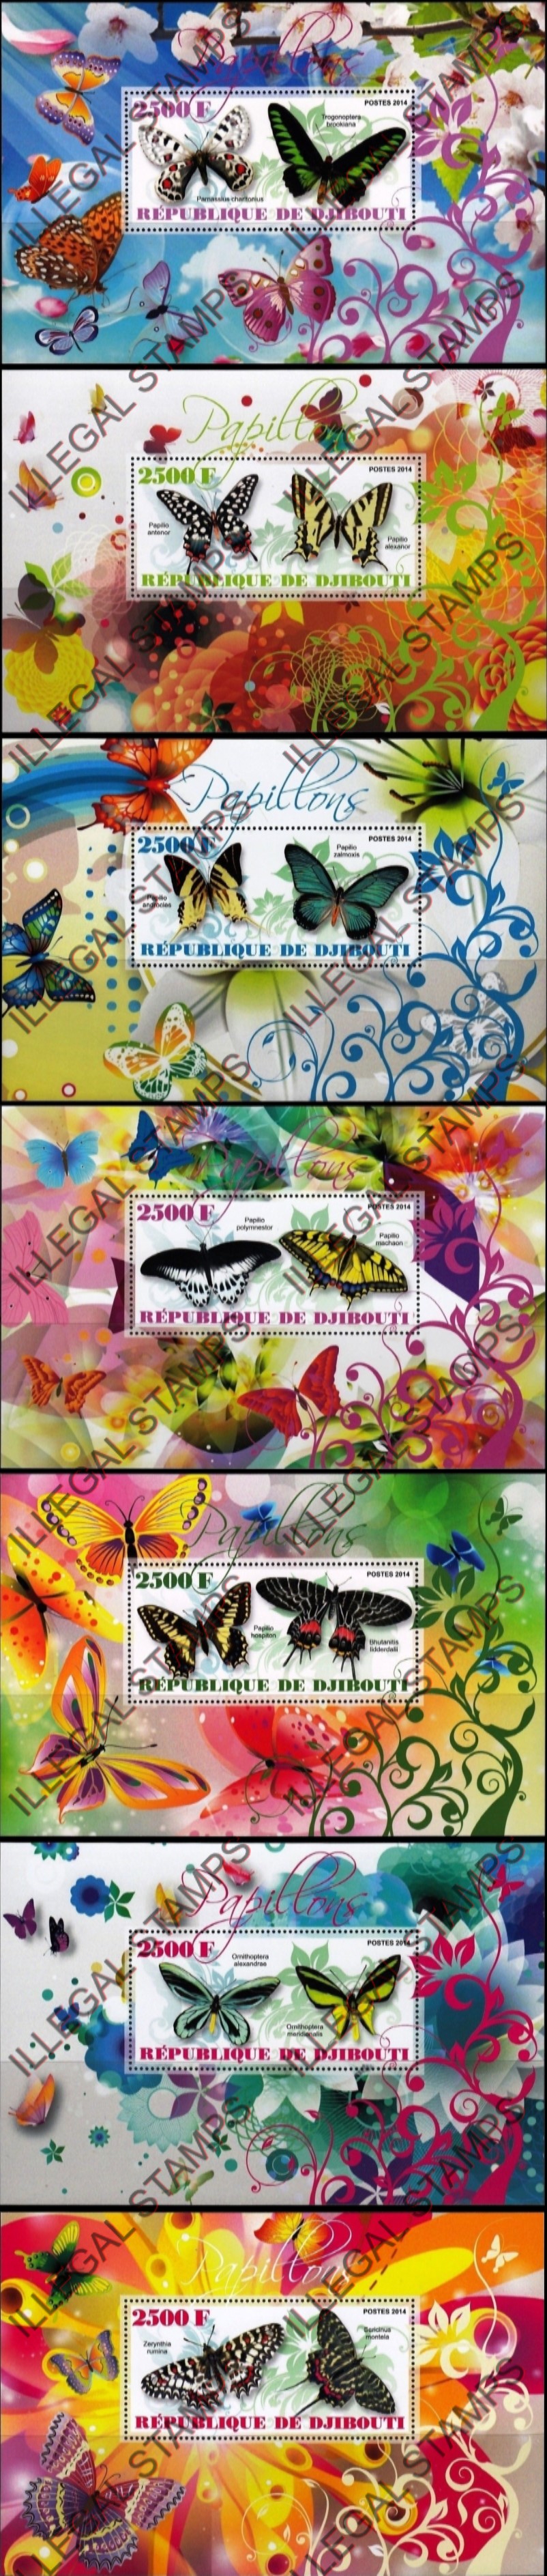 Djibouti 2014 Butterflies Illegal Stamp Souvenir Sheets of 1